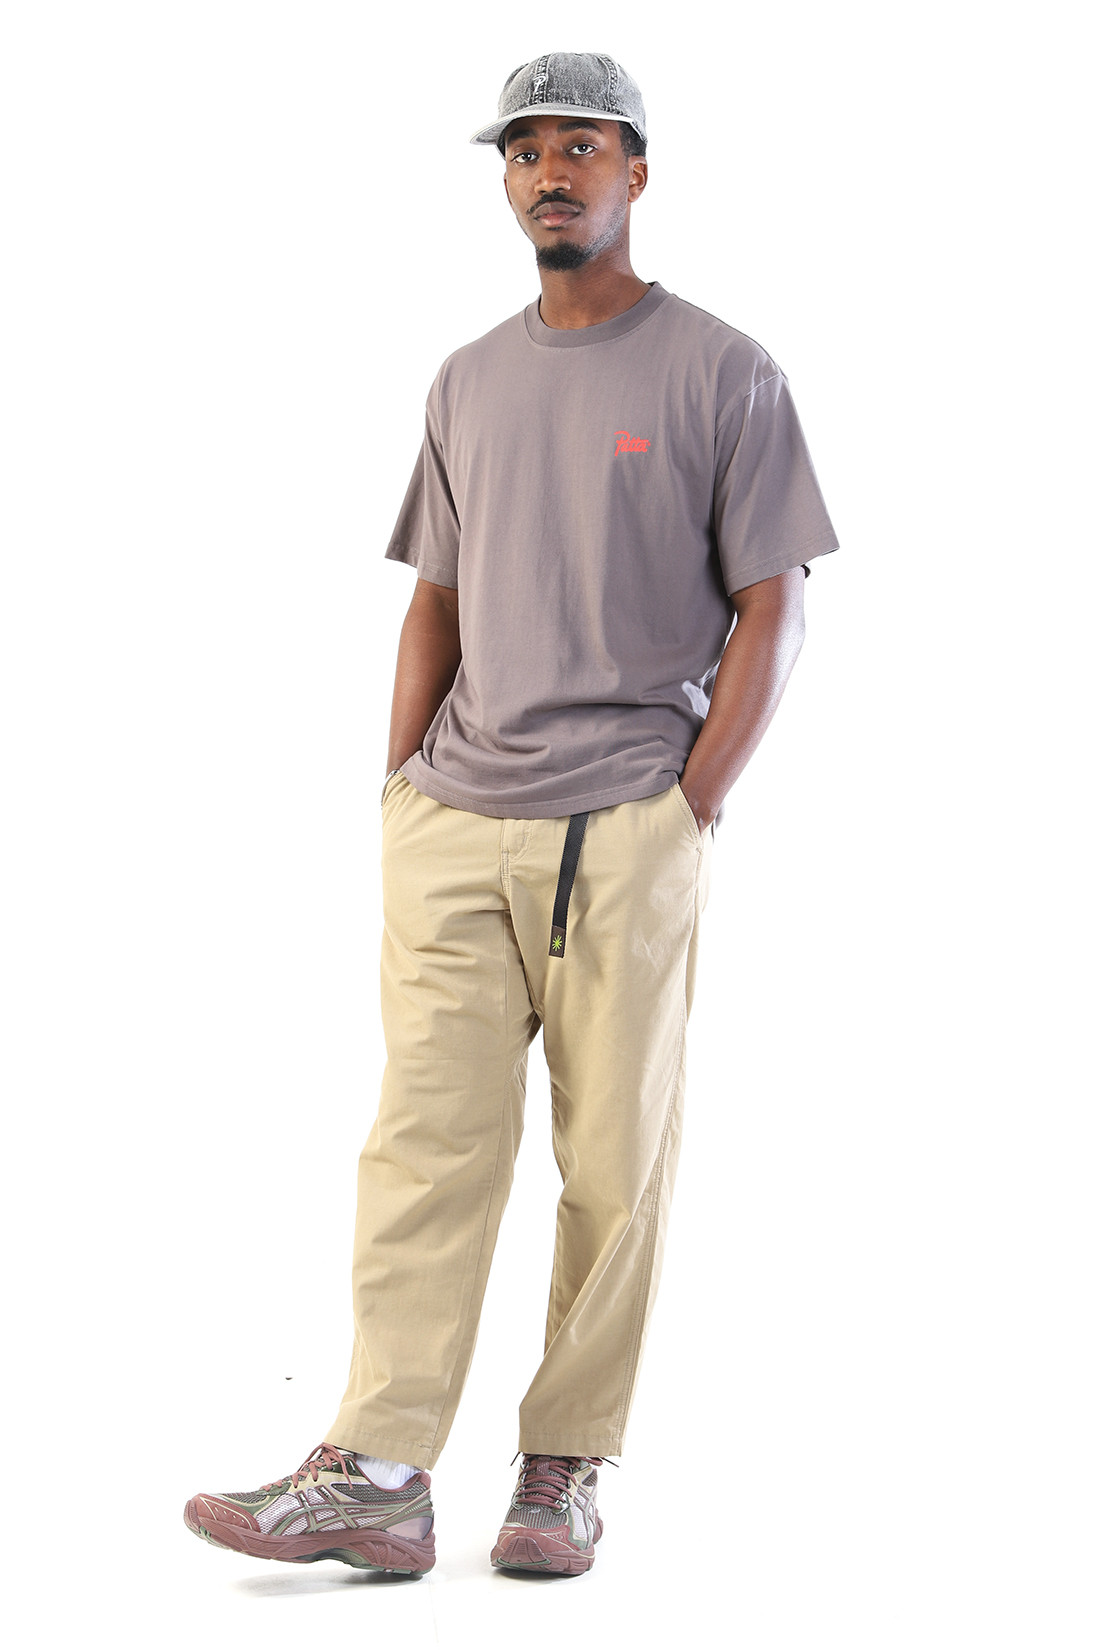 Hemp utility basic pants Desert tan